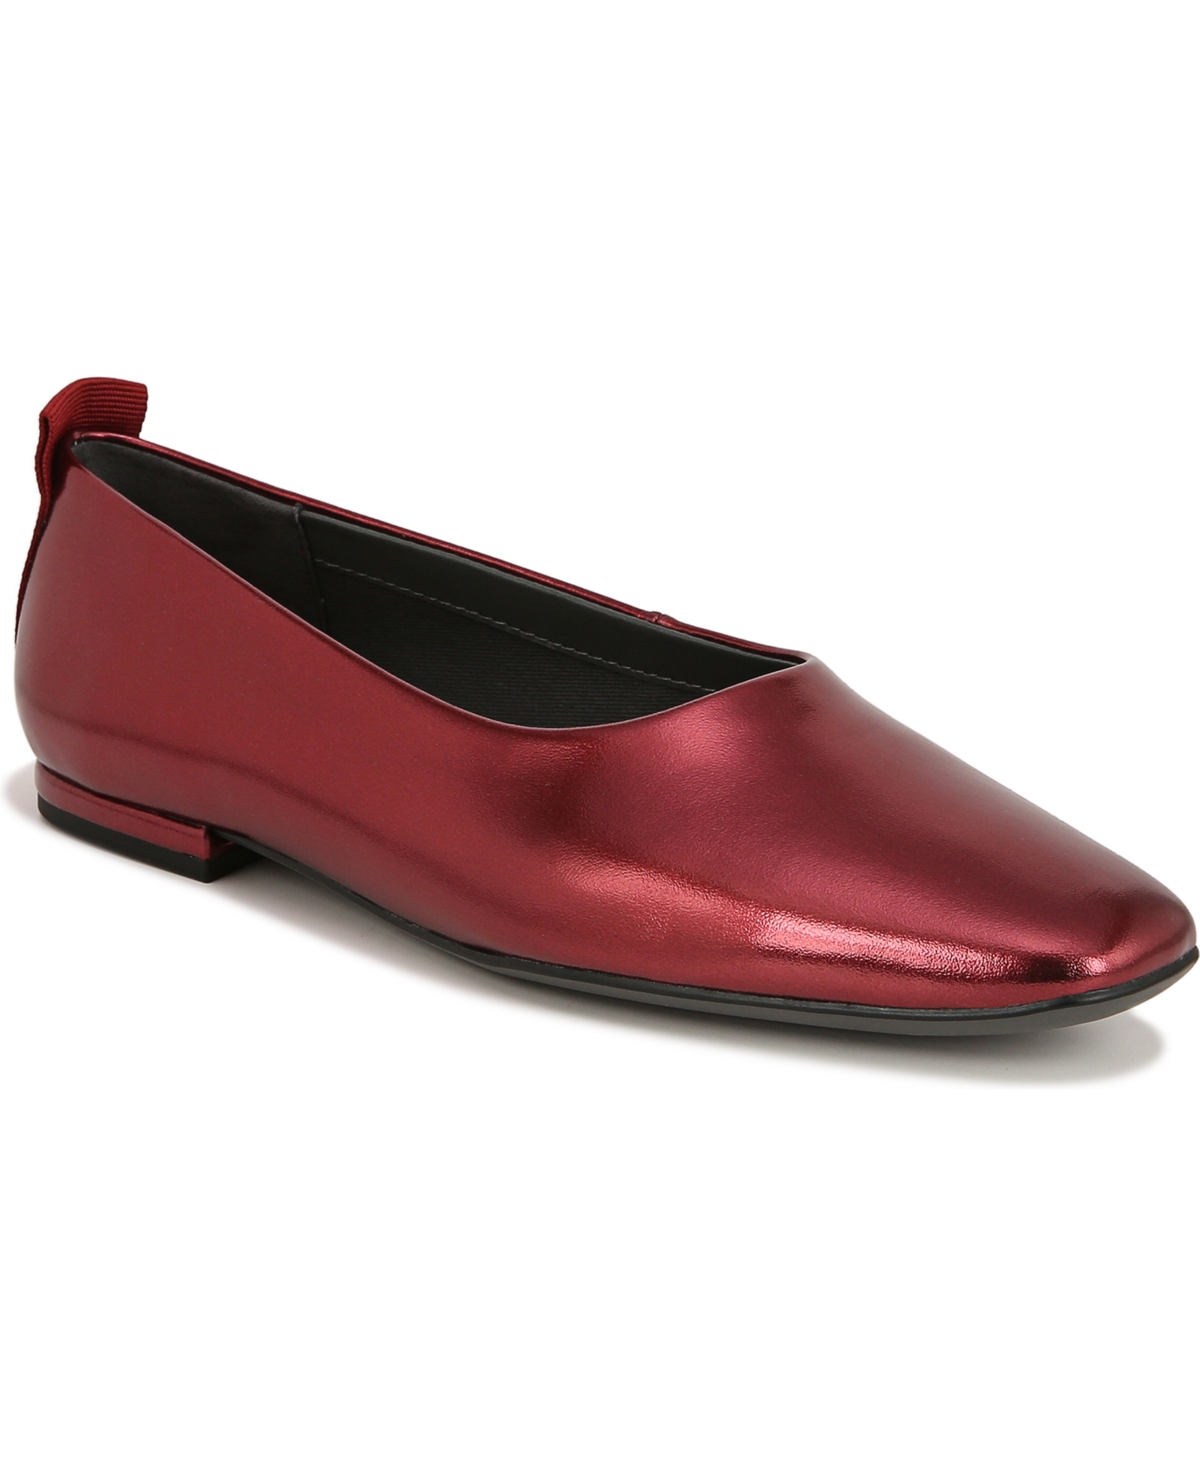 Women's Vana Ballet Flats - Metallic Red Faux Leather